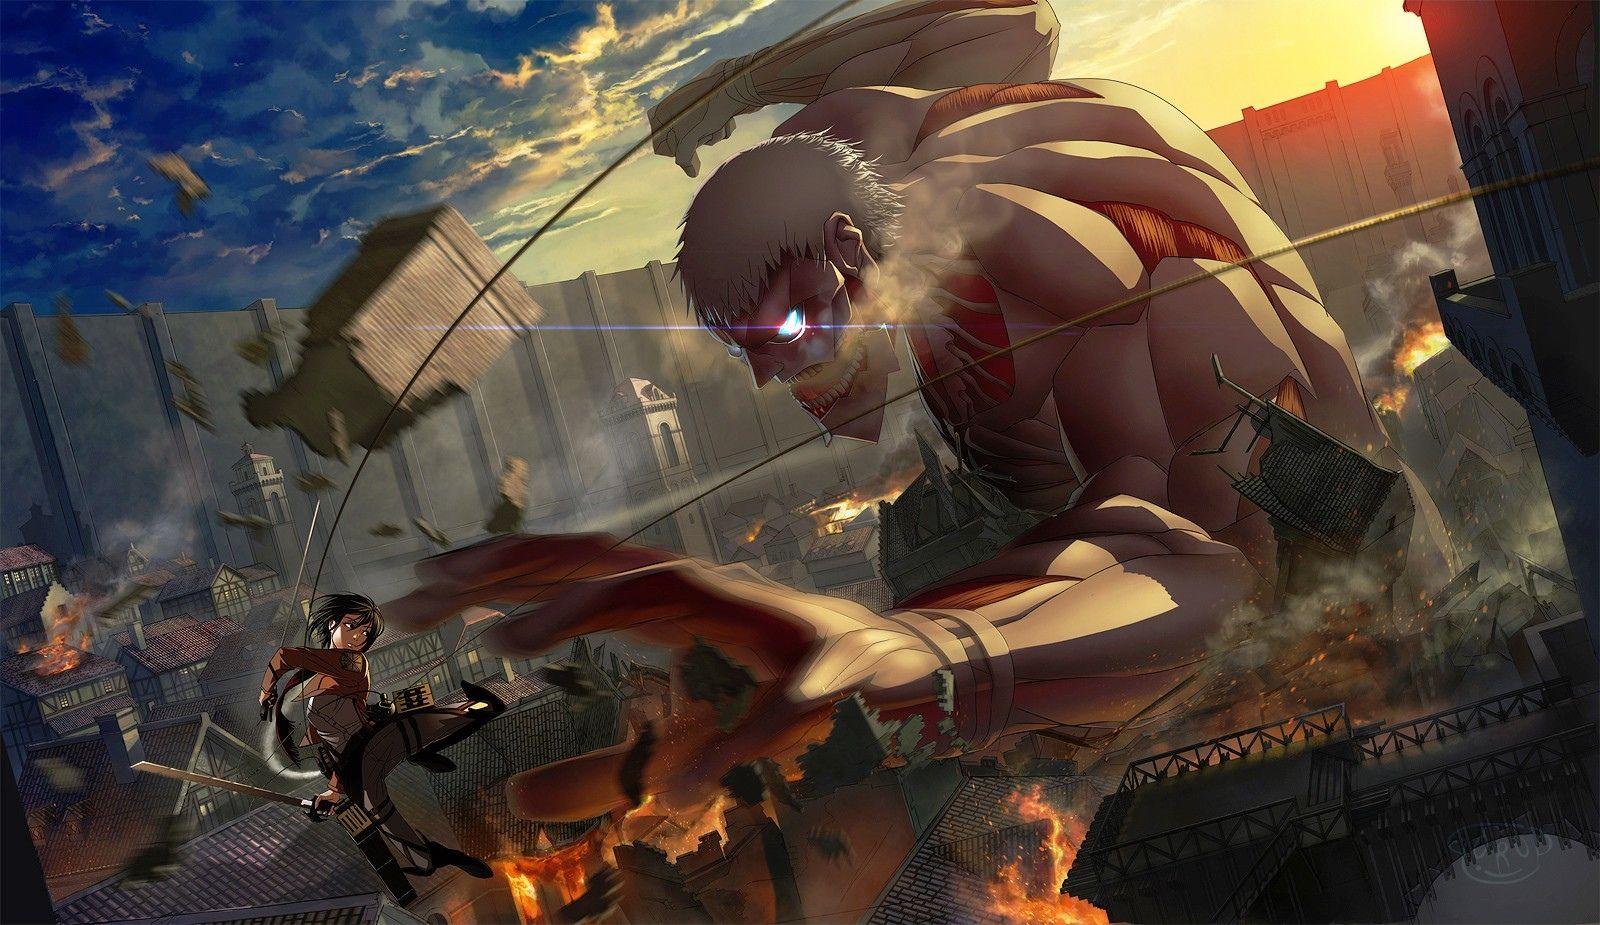 Epic Final Season of Attack on Titan